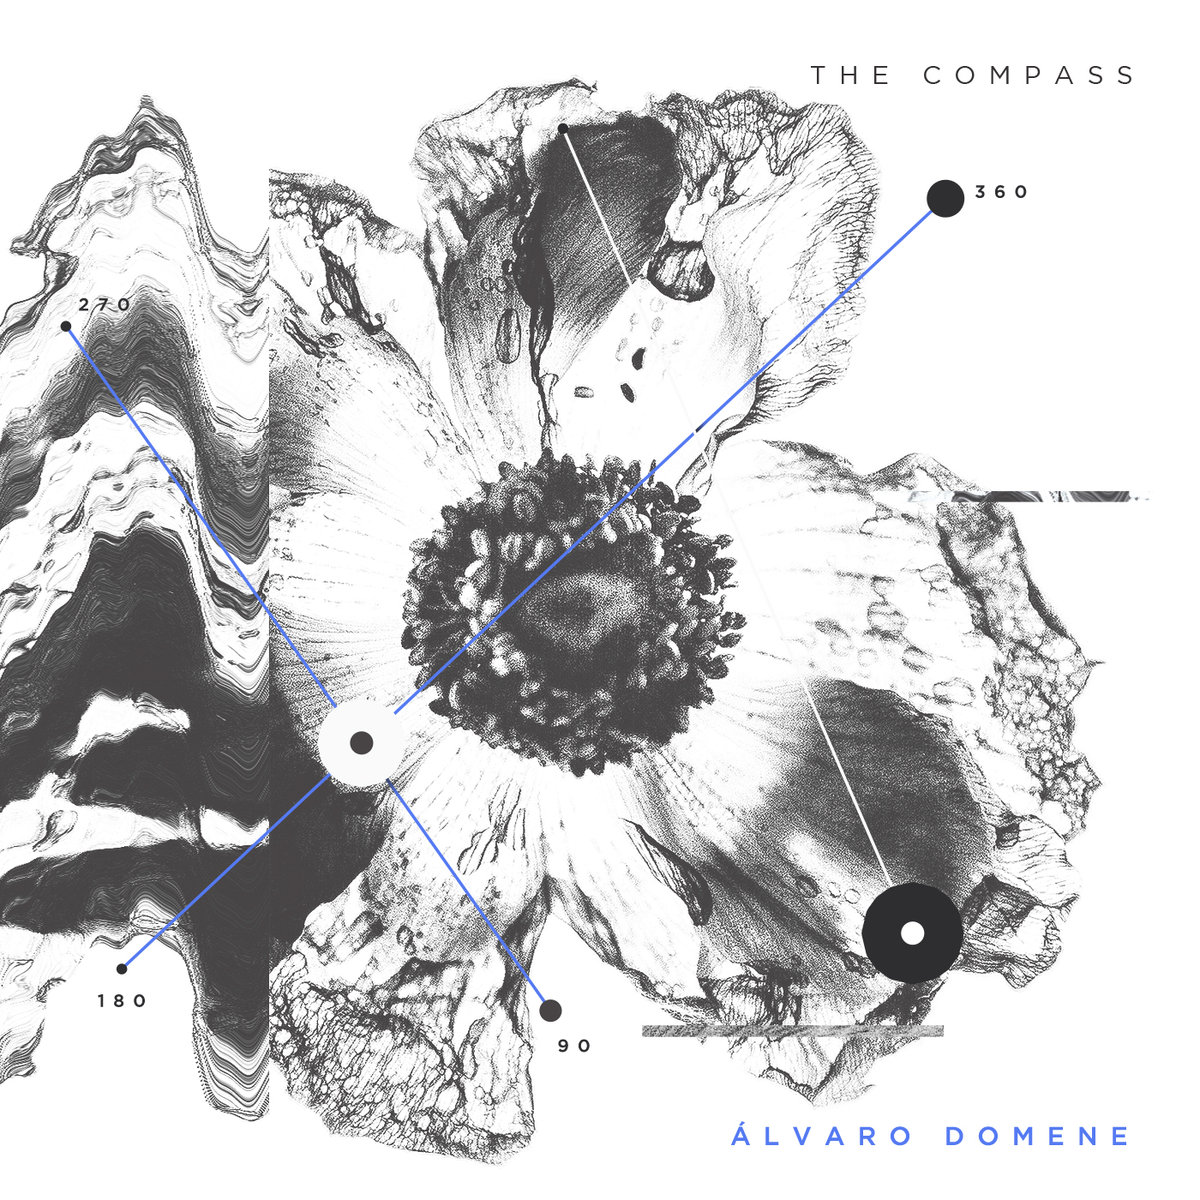 The Compass by Álvaro Domene